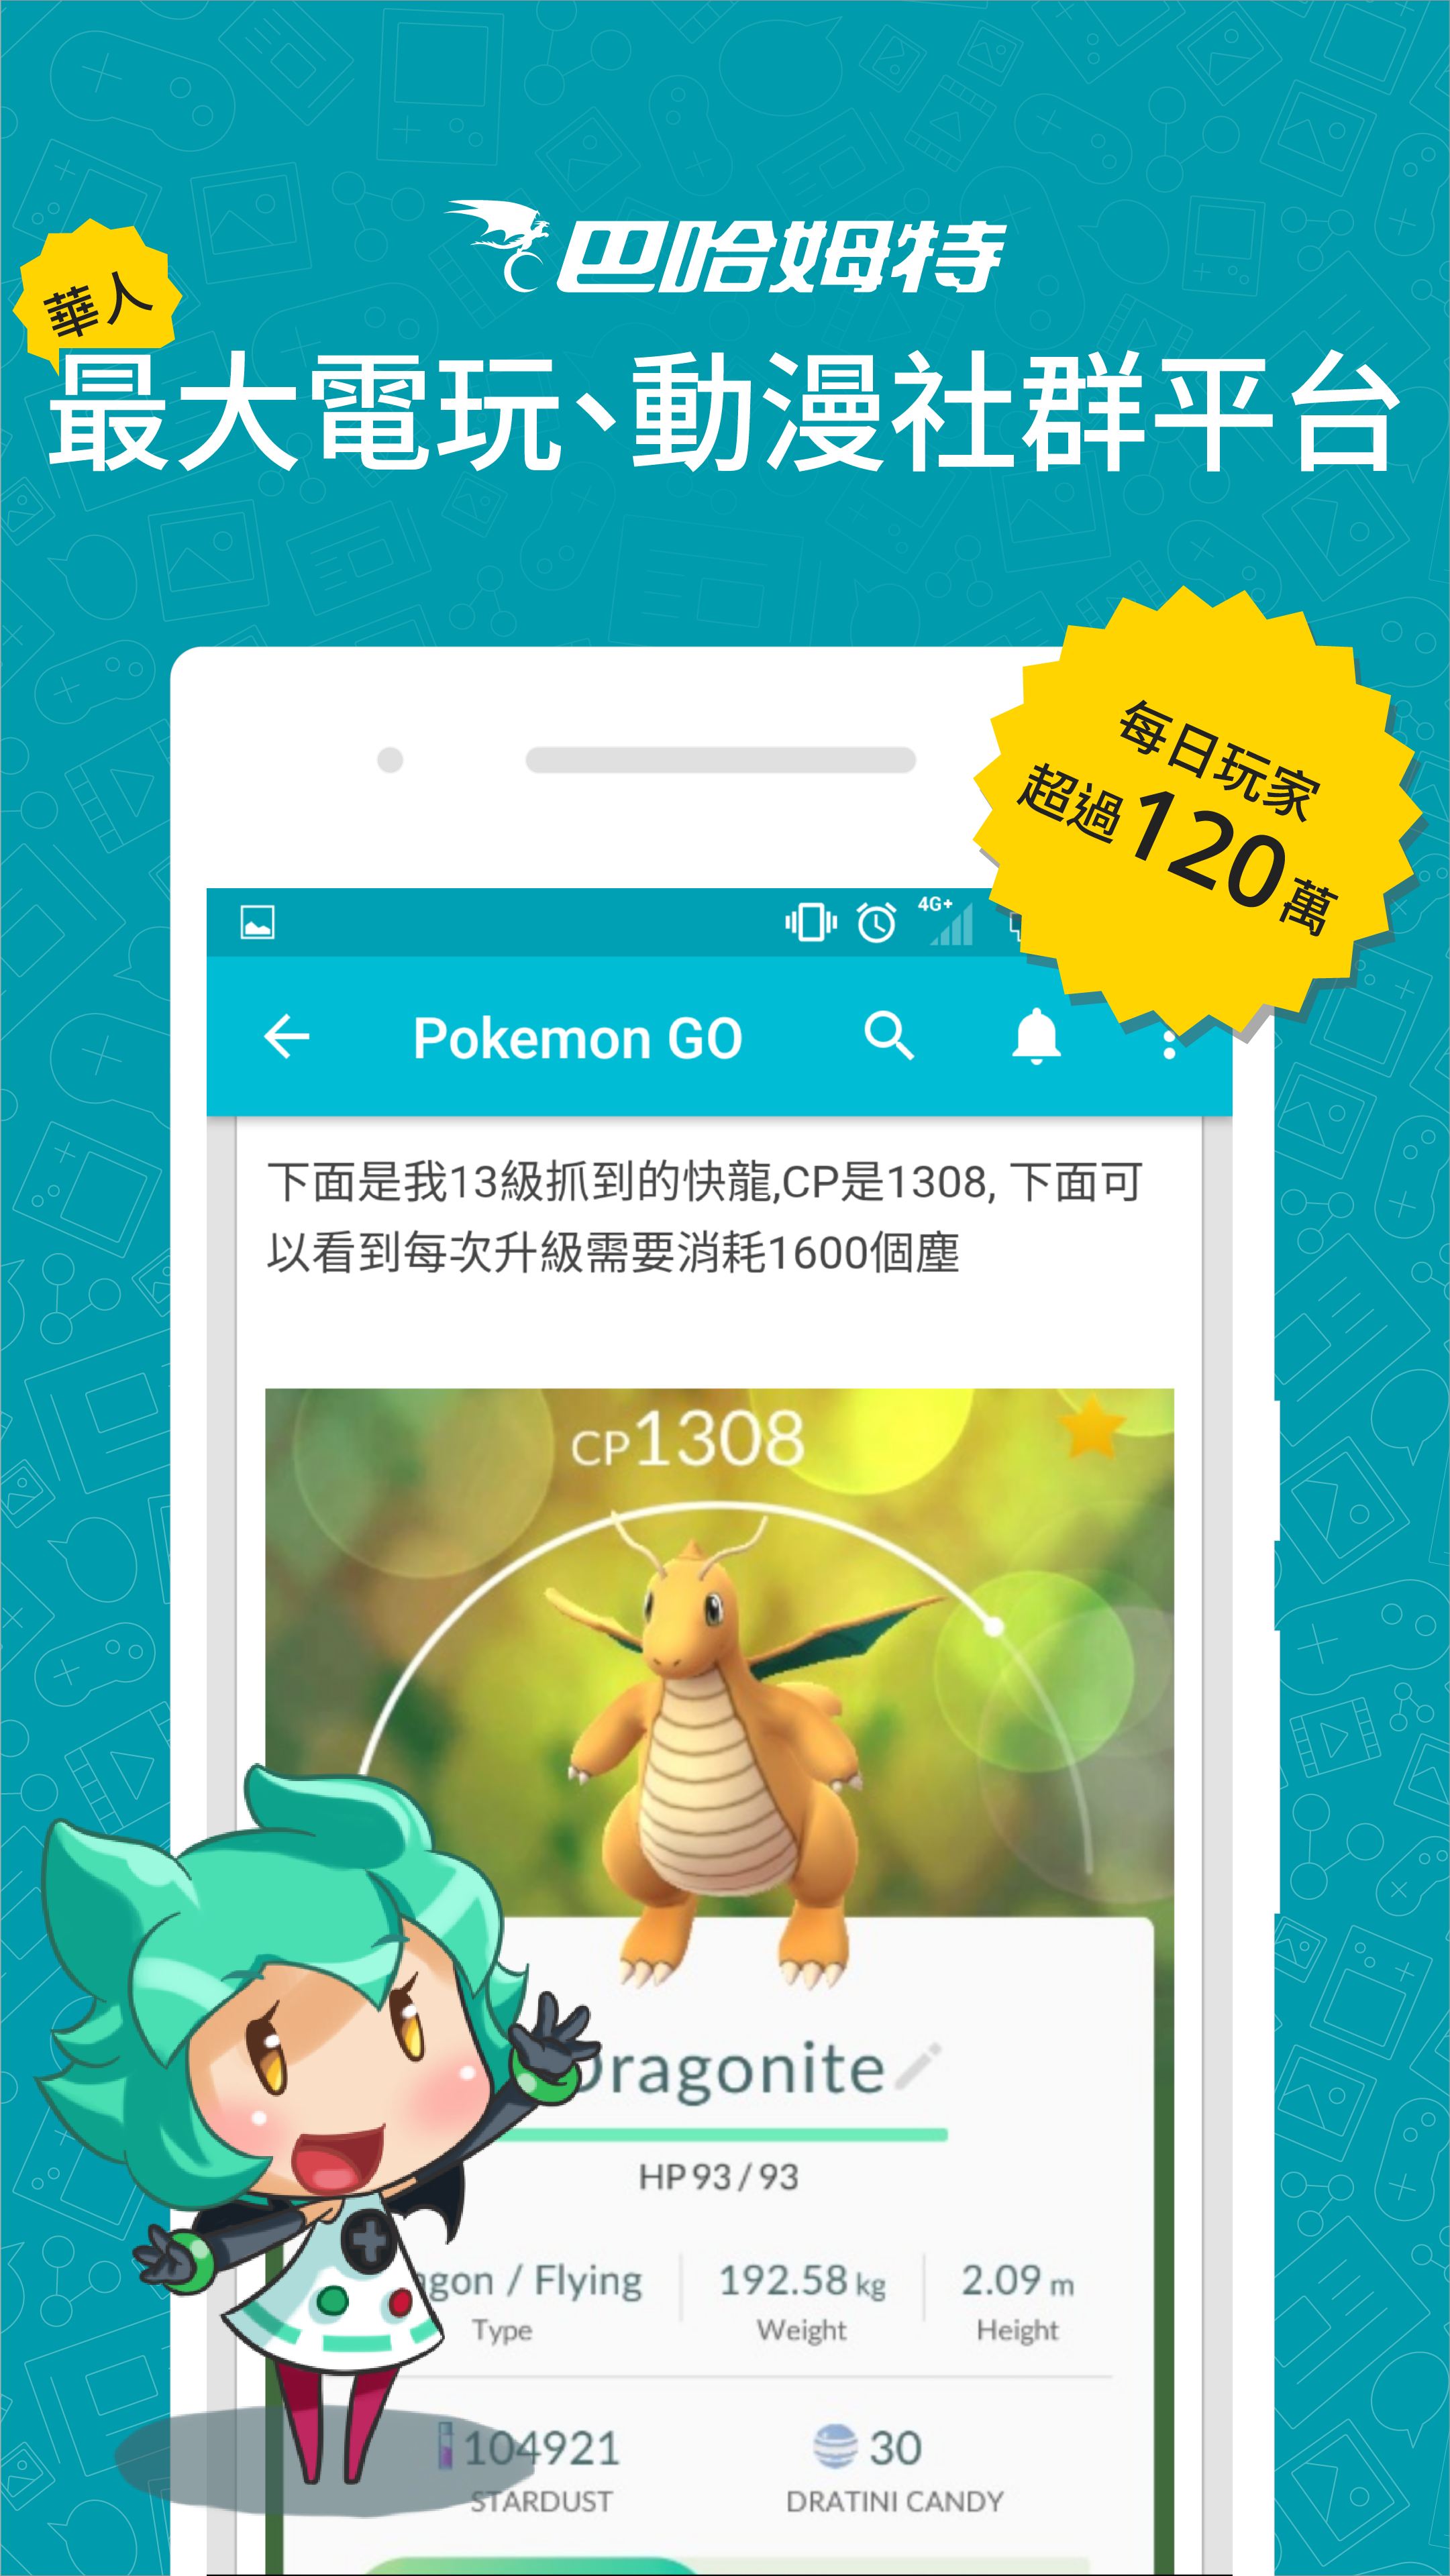 Android application 巴哈姆特 - 華人最大遊戲及動漫社群網站 screenshort